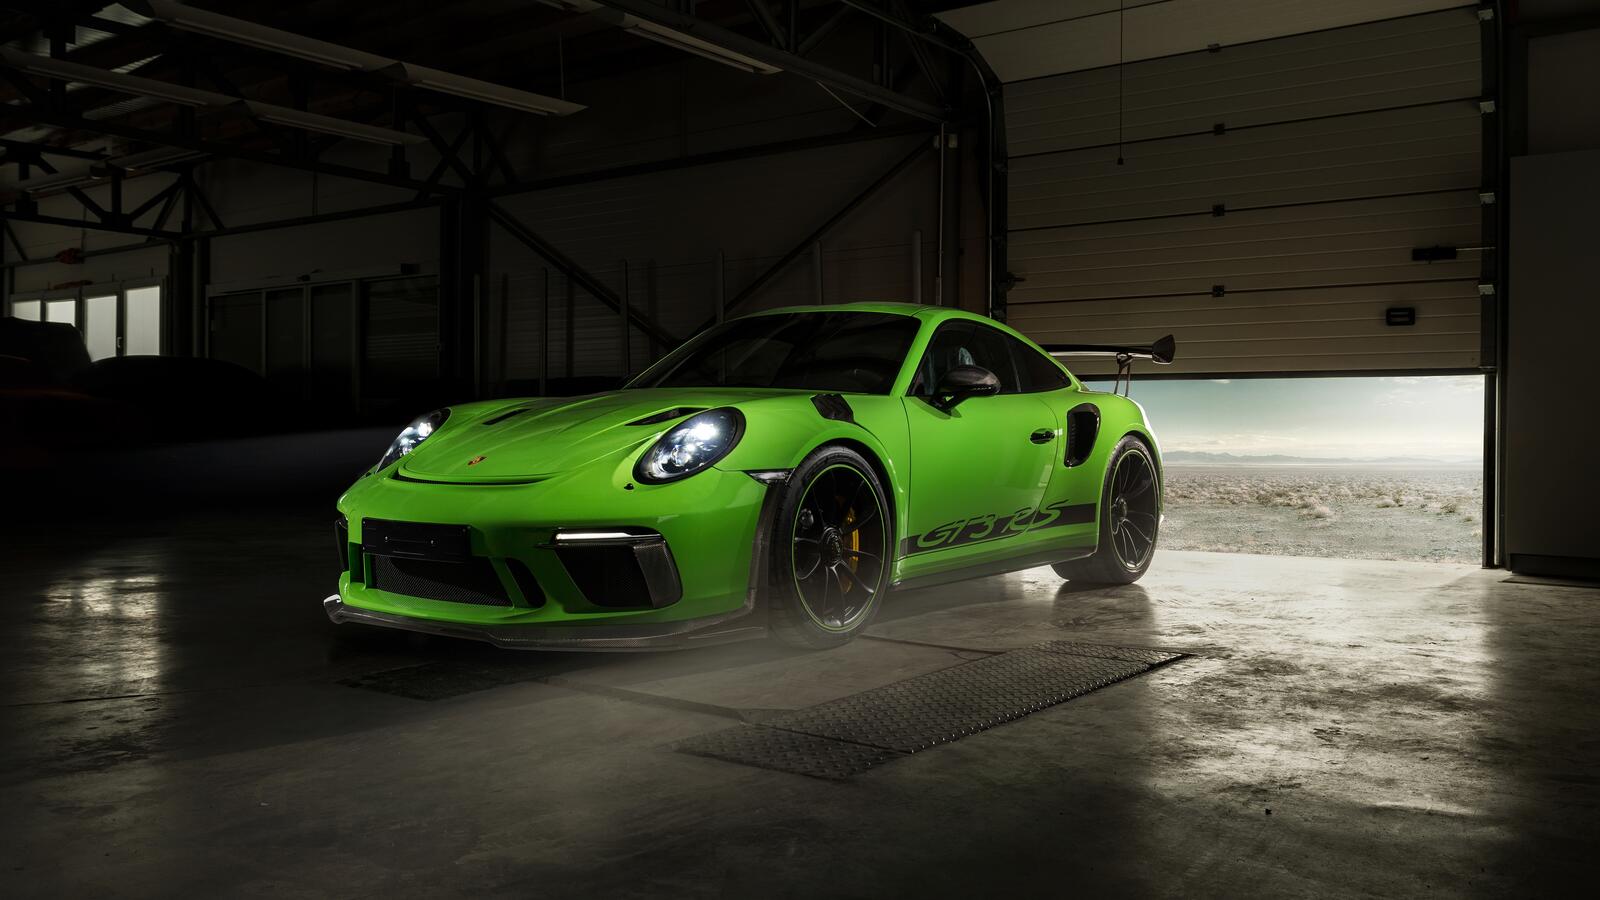 Free photo Porsche 911 GT3 RS green in the hangar.